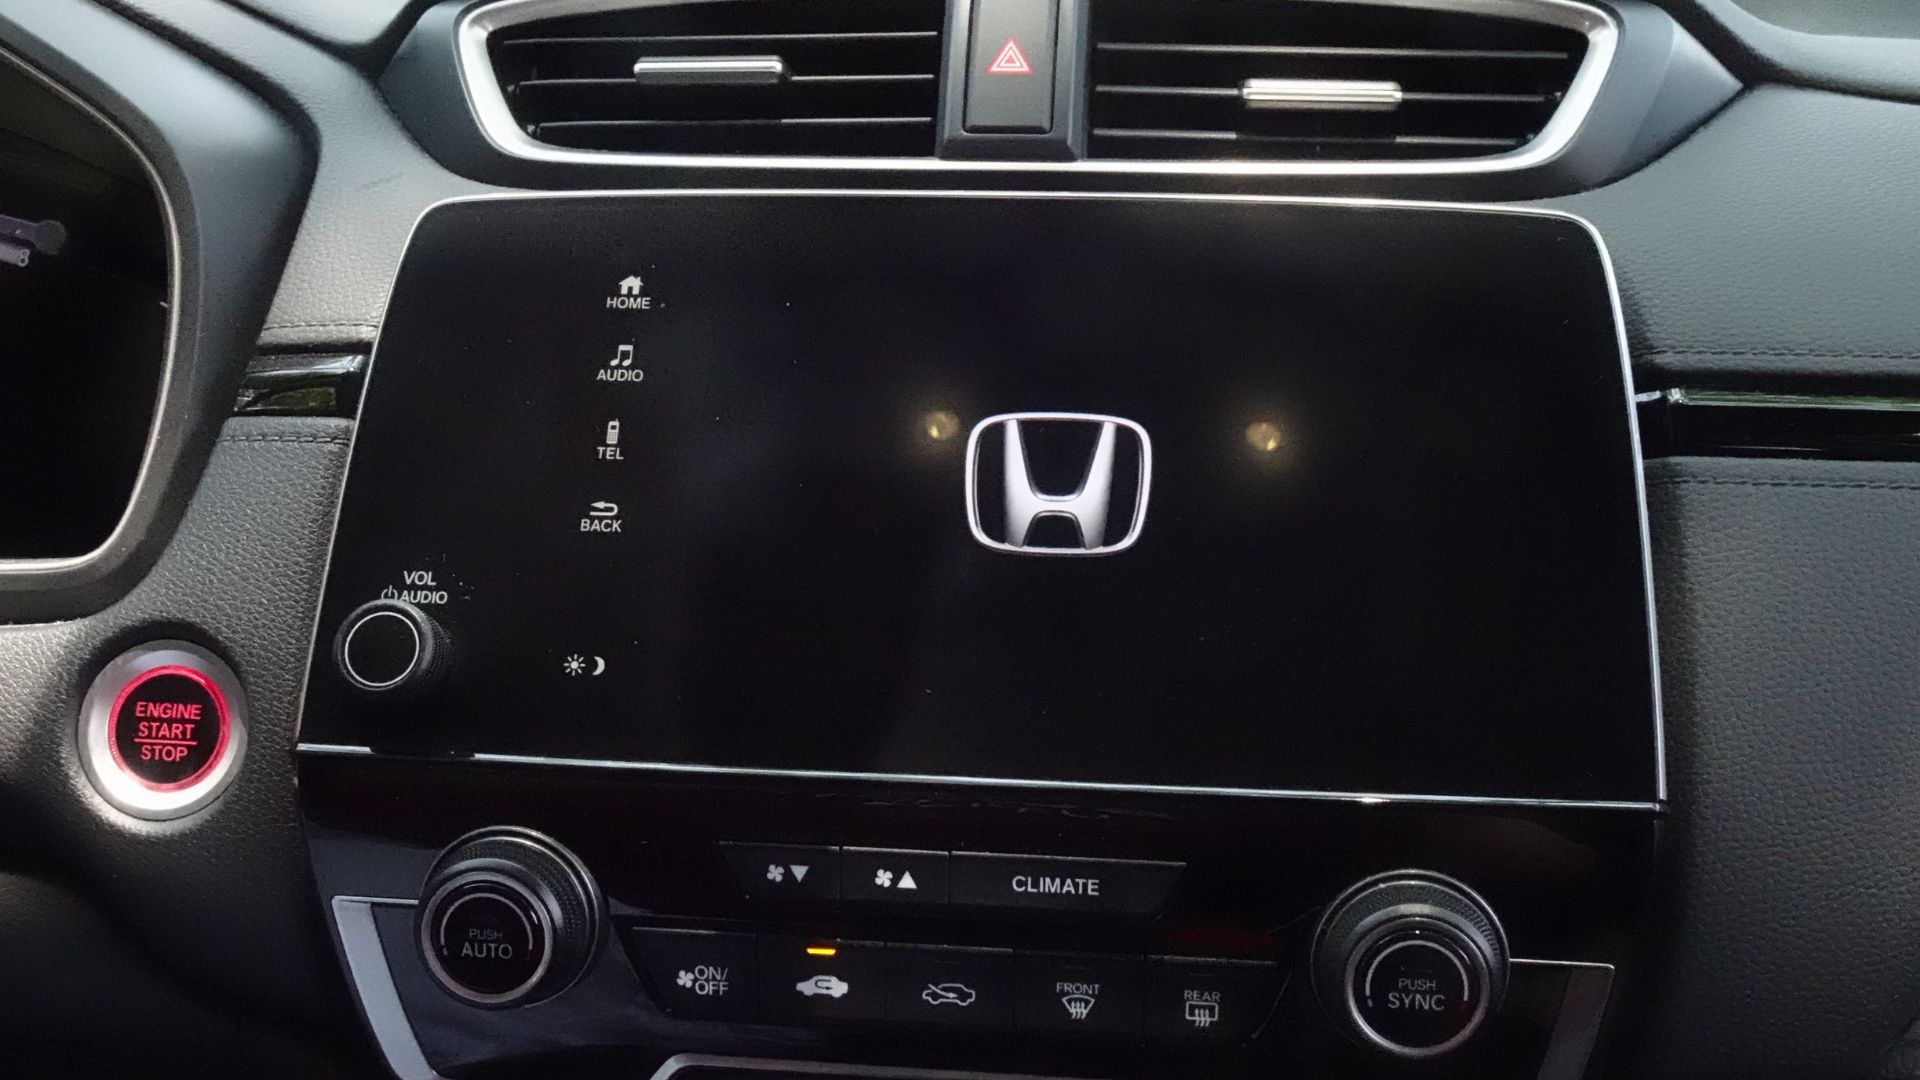 5th gen Honda CR-V touchscreen